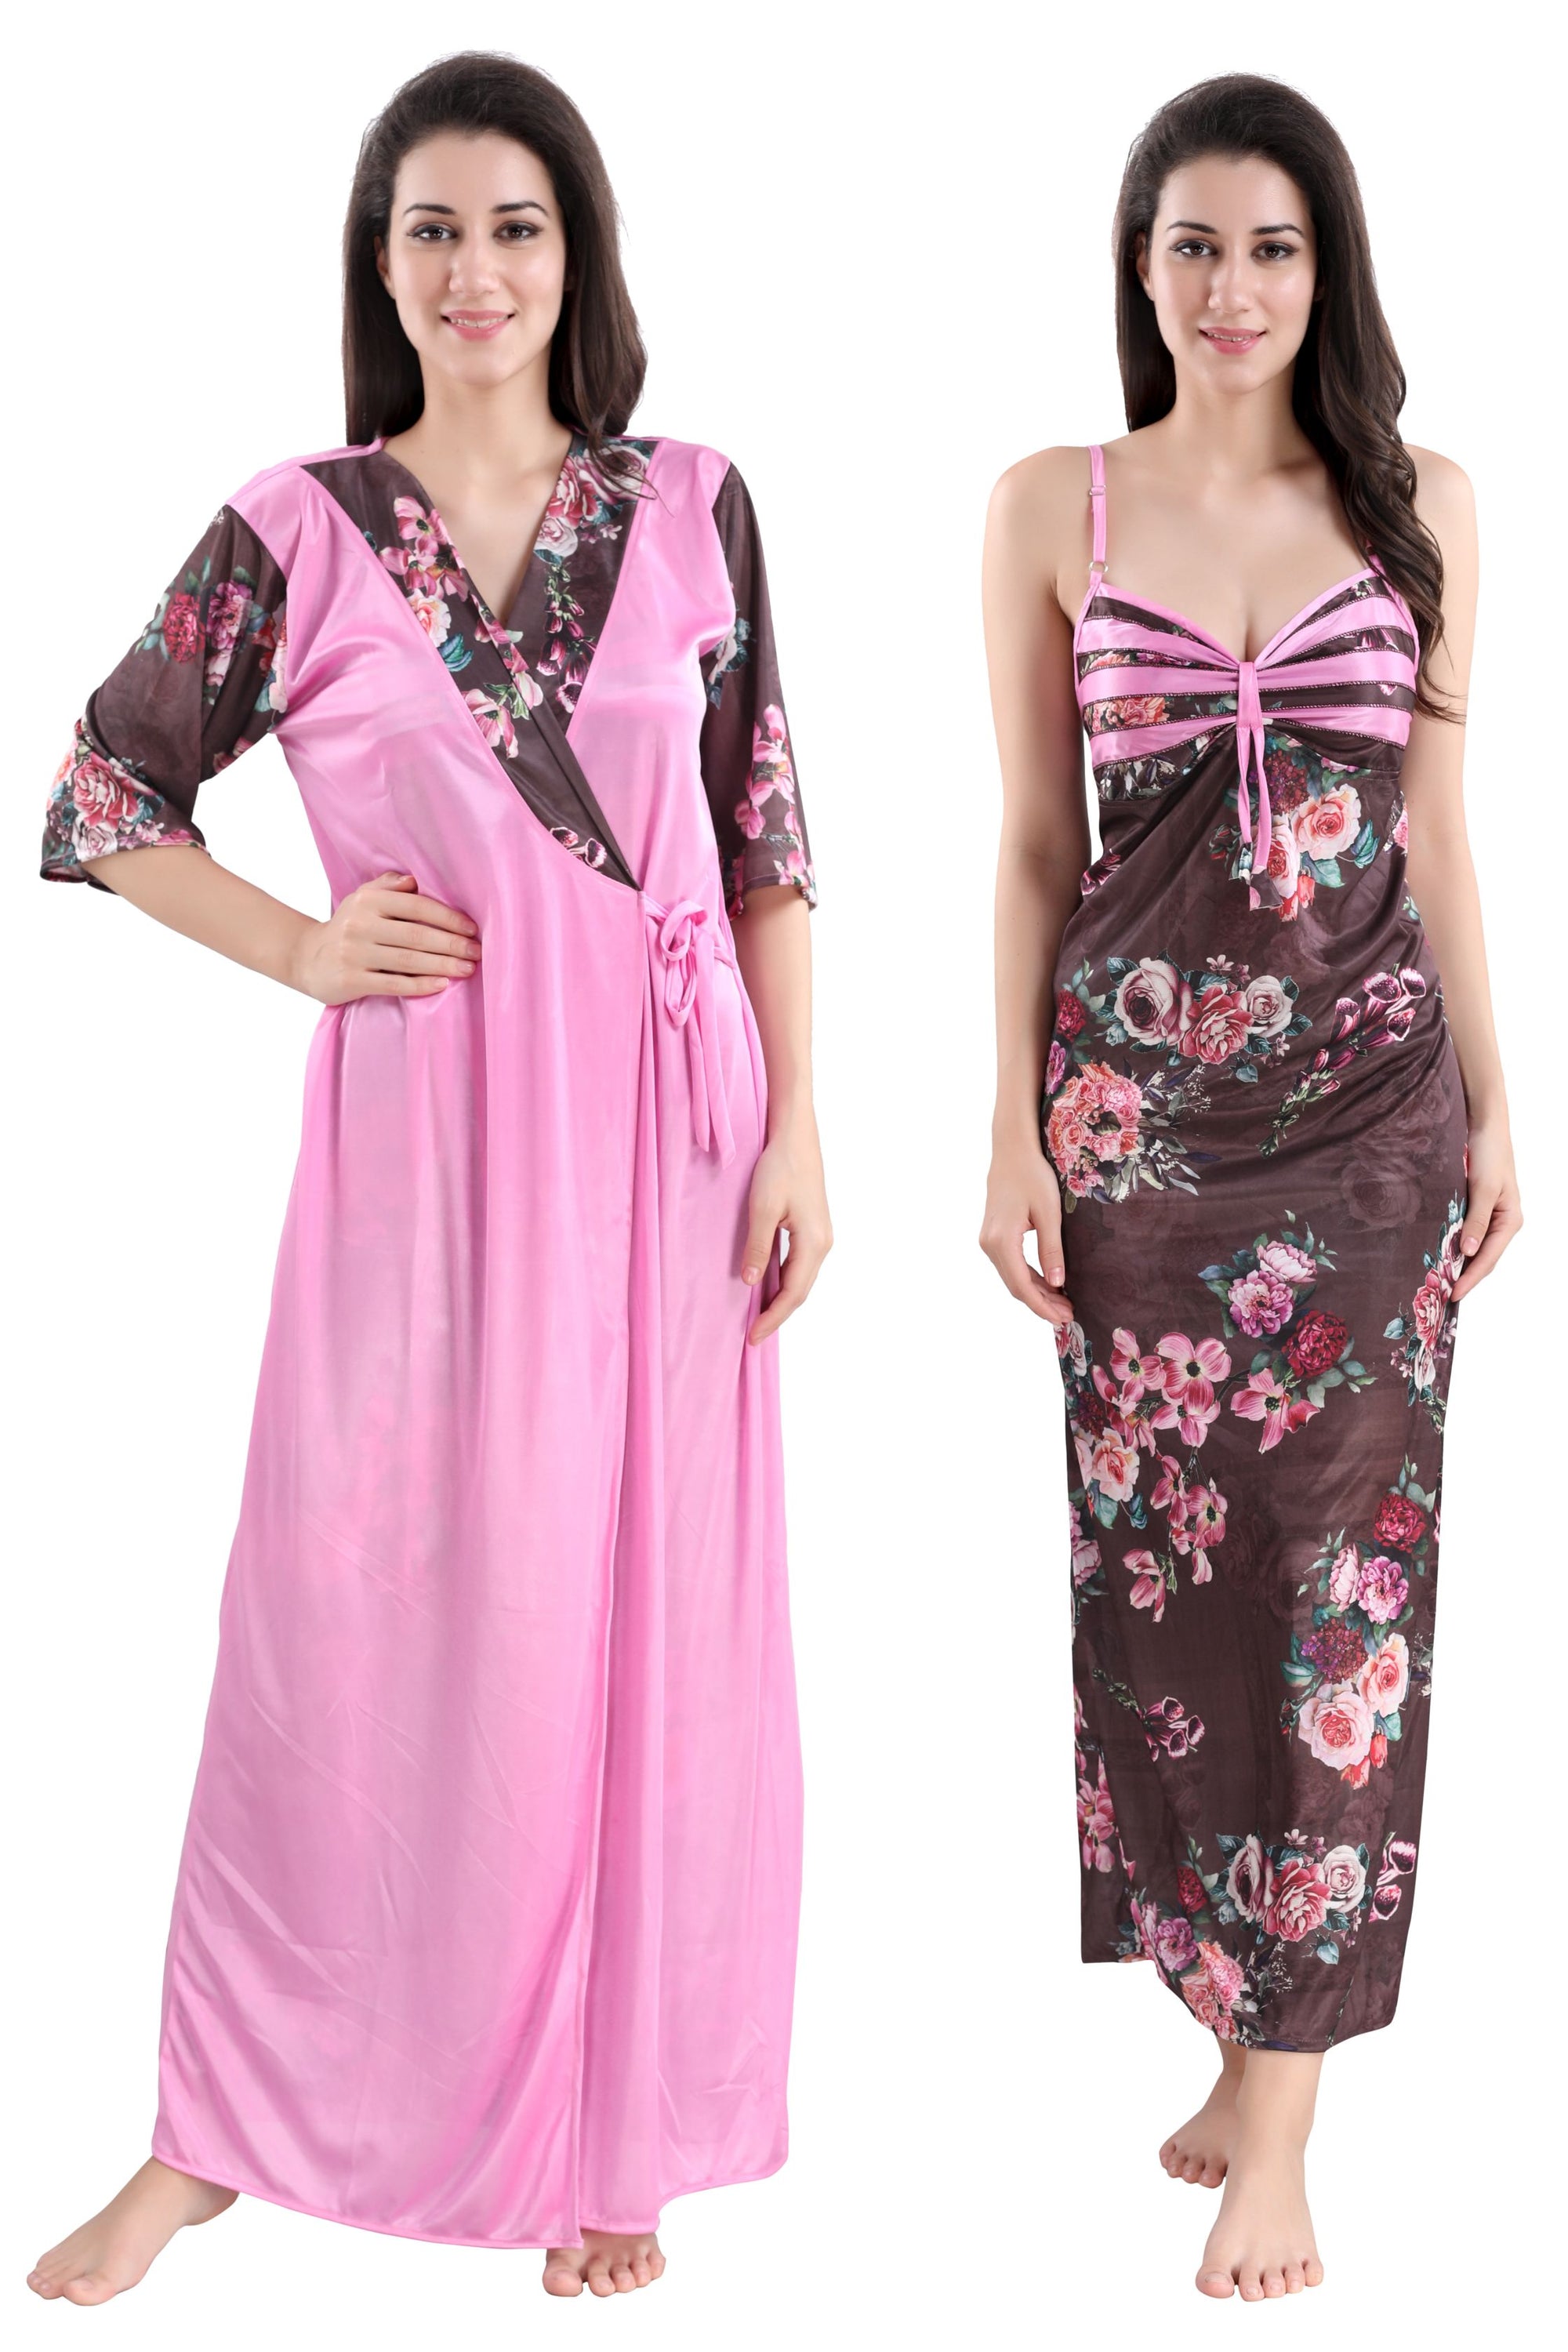 Style Dunes Women's Stylish Digital Print Satin Night Dress with Robe 2 Piece Nightwear Set - Free Size Nighty - Wowxop